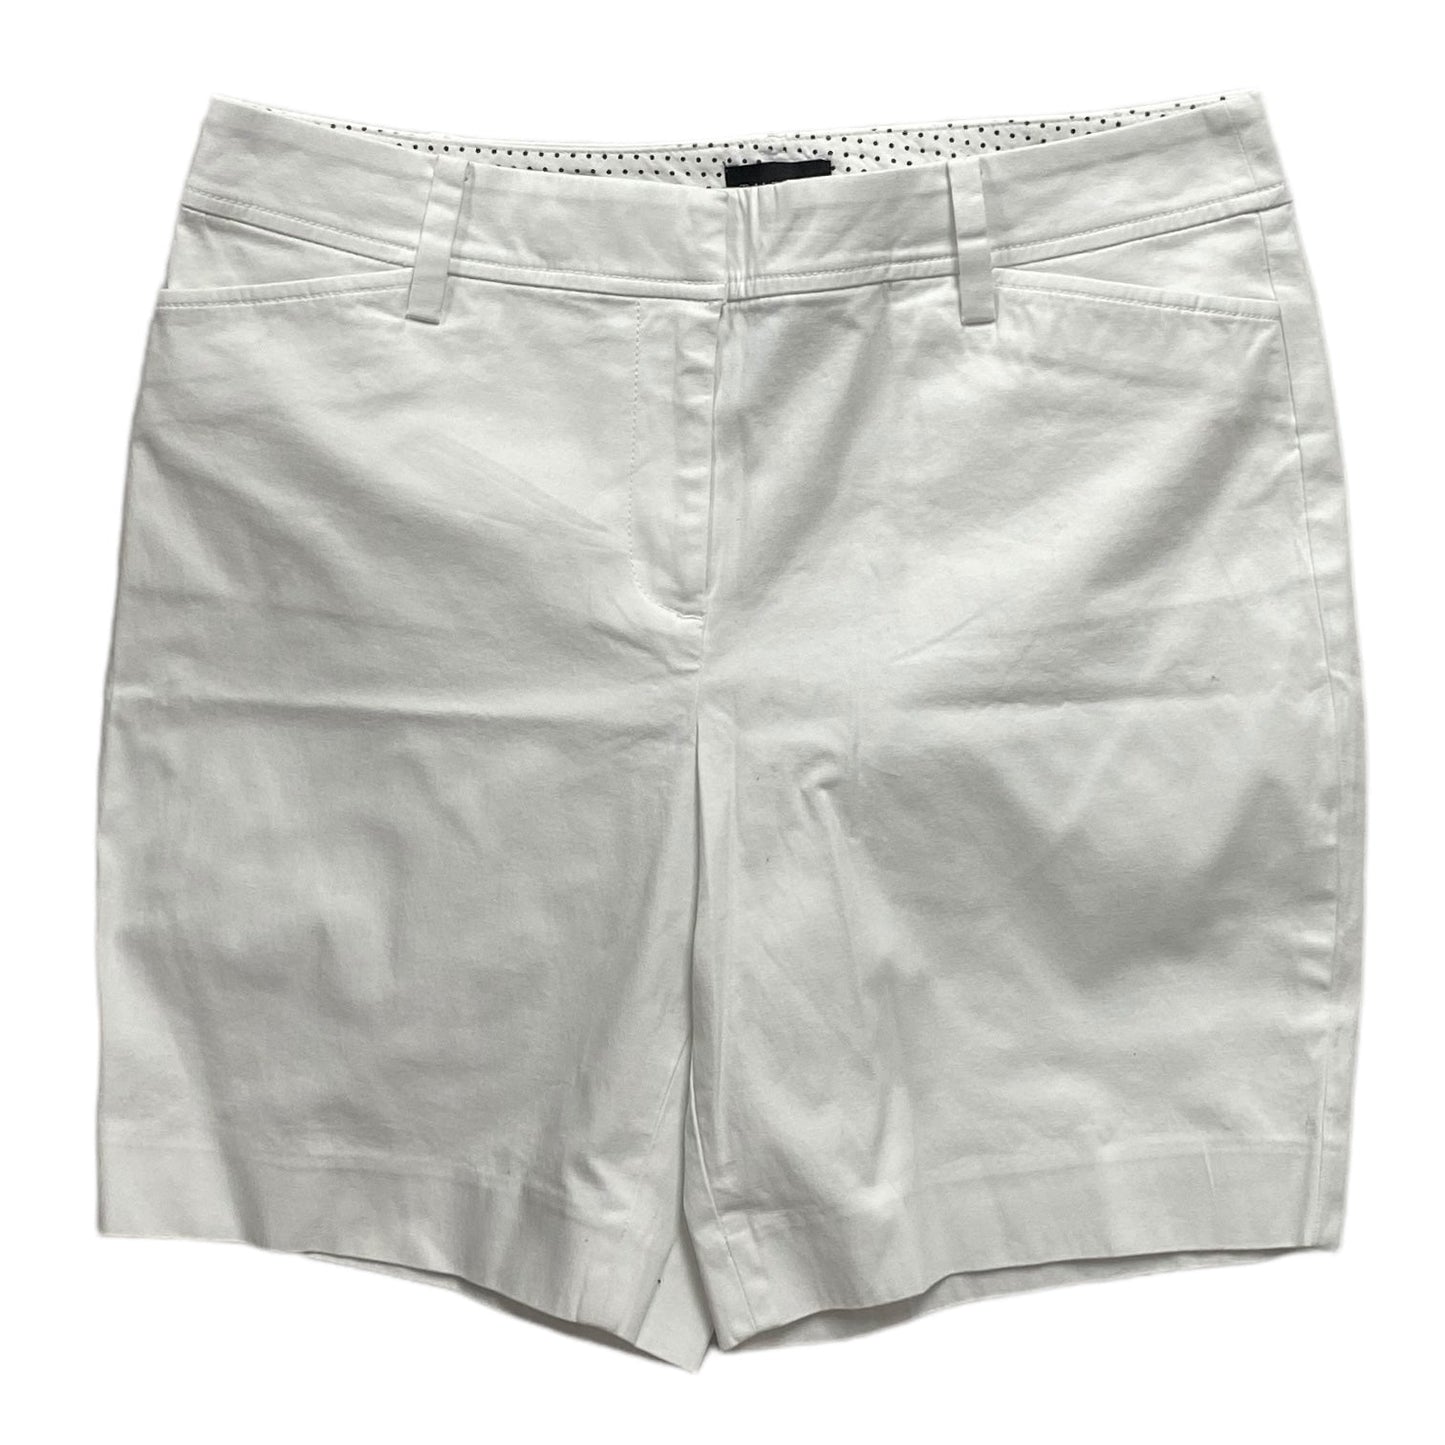 White Shorts Talbots, Size 8petite